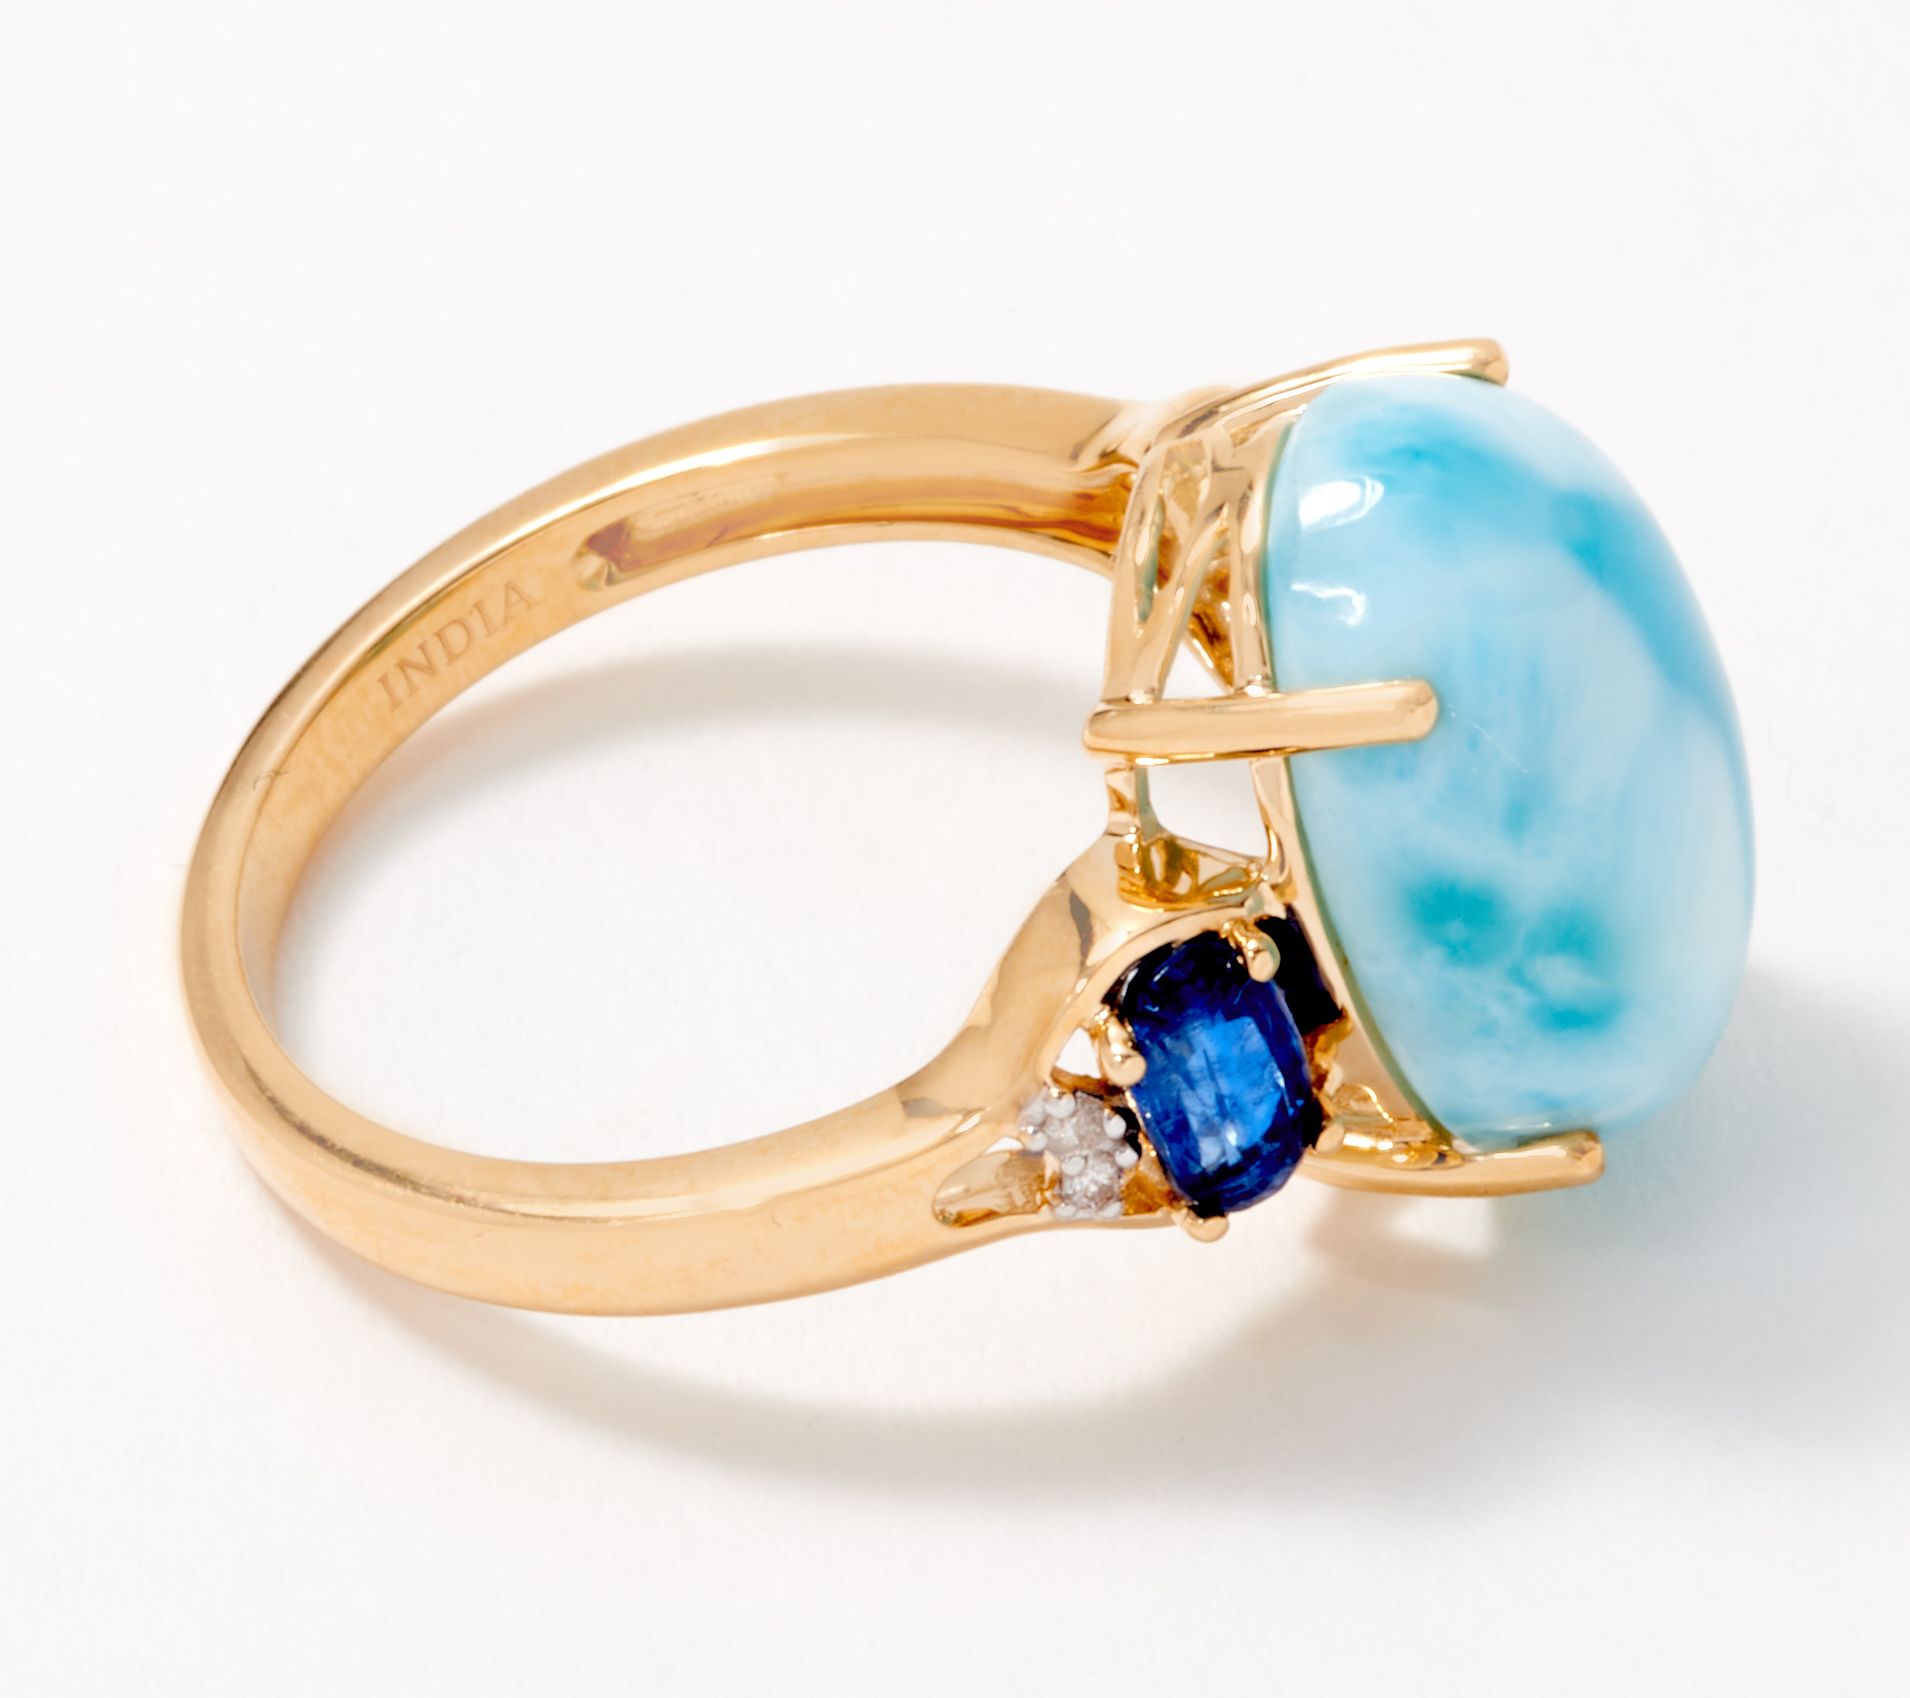 Details about   Stunning Larimar Gemstone Round Shape Jewelry 14k White Gold Ring